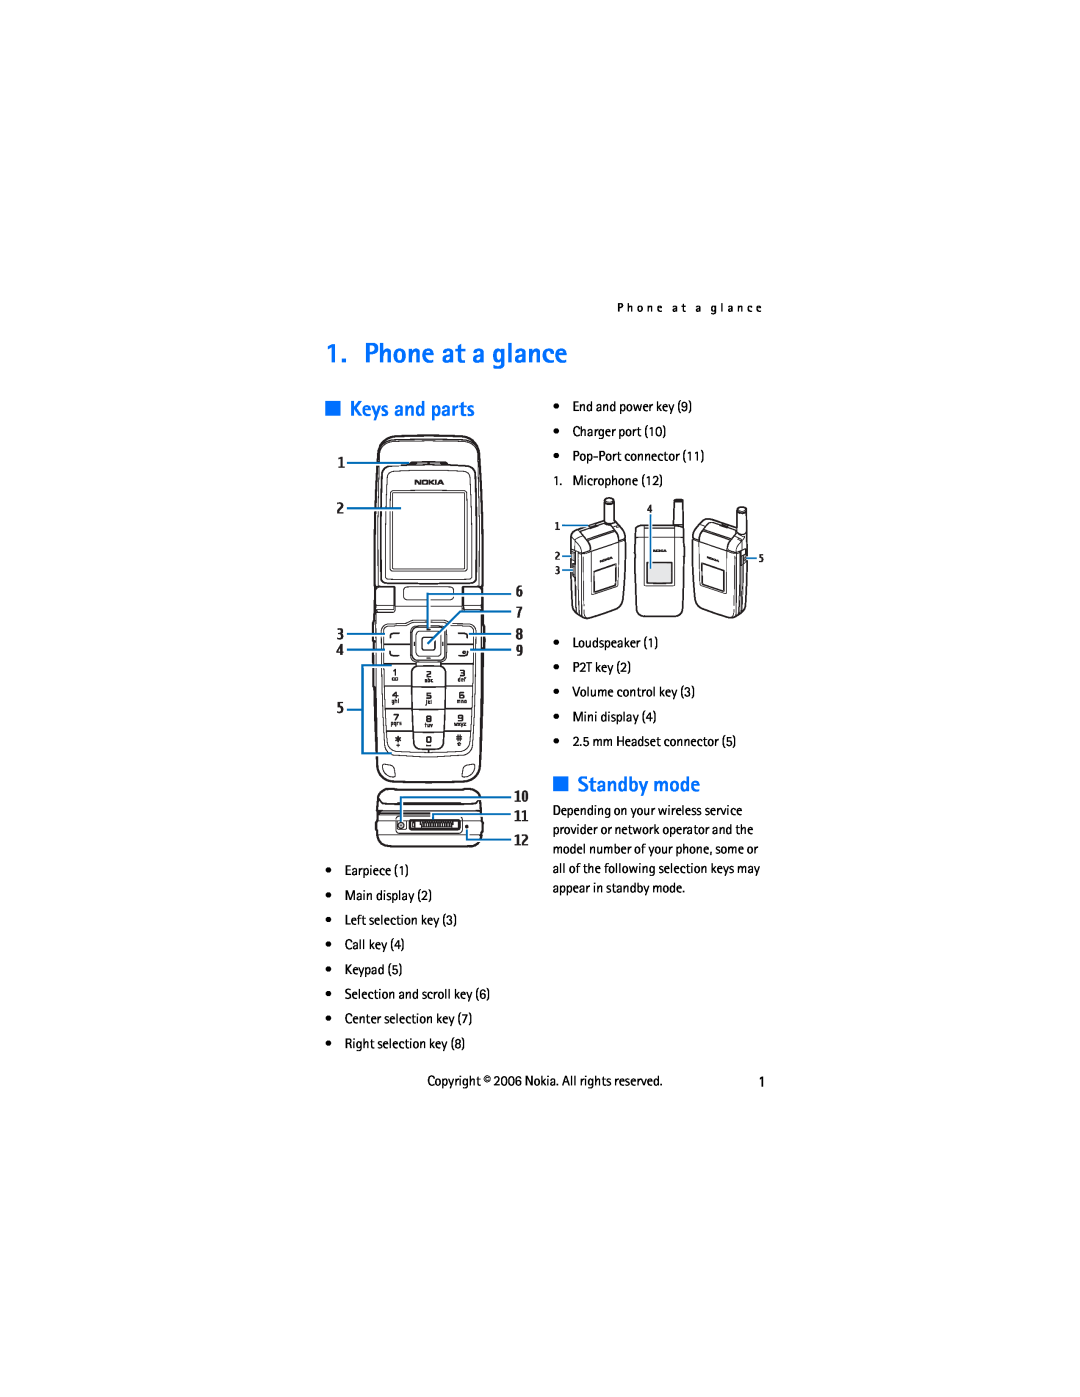 Nokia 2855 manual Phone at a glance, Keys and parts, Standby mode 